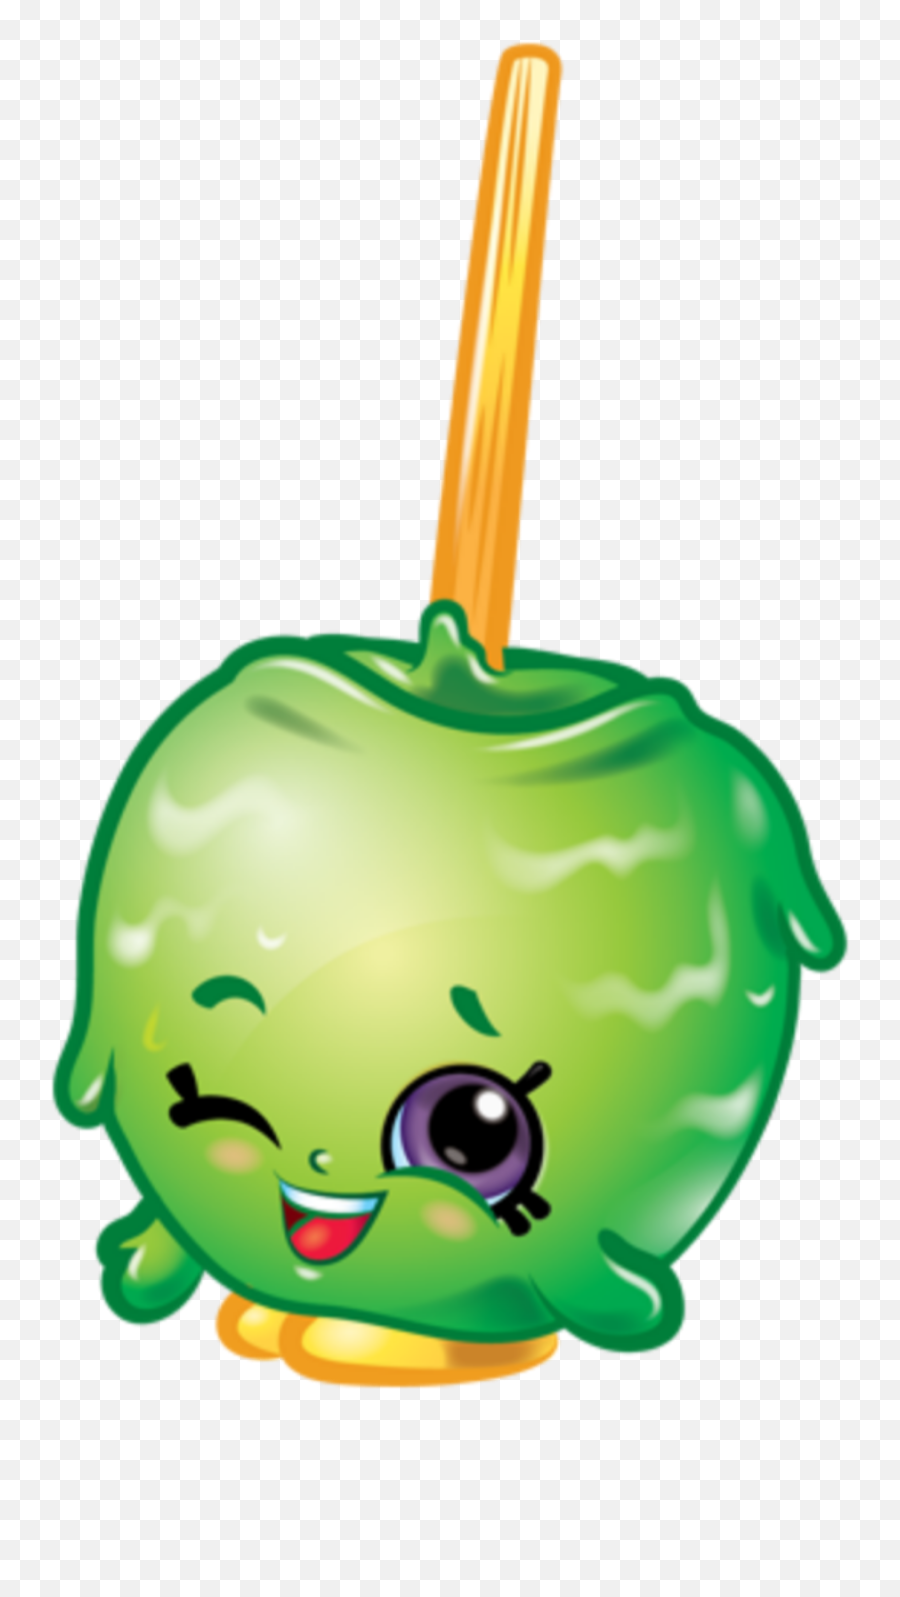 Mq Green Apple Fruit Emoji Sticker - Cartoon Character Shopkins Season One,Apple Fruit Emoji